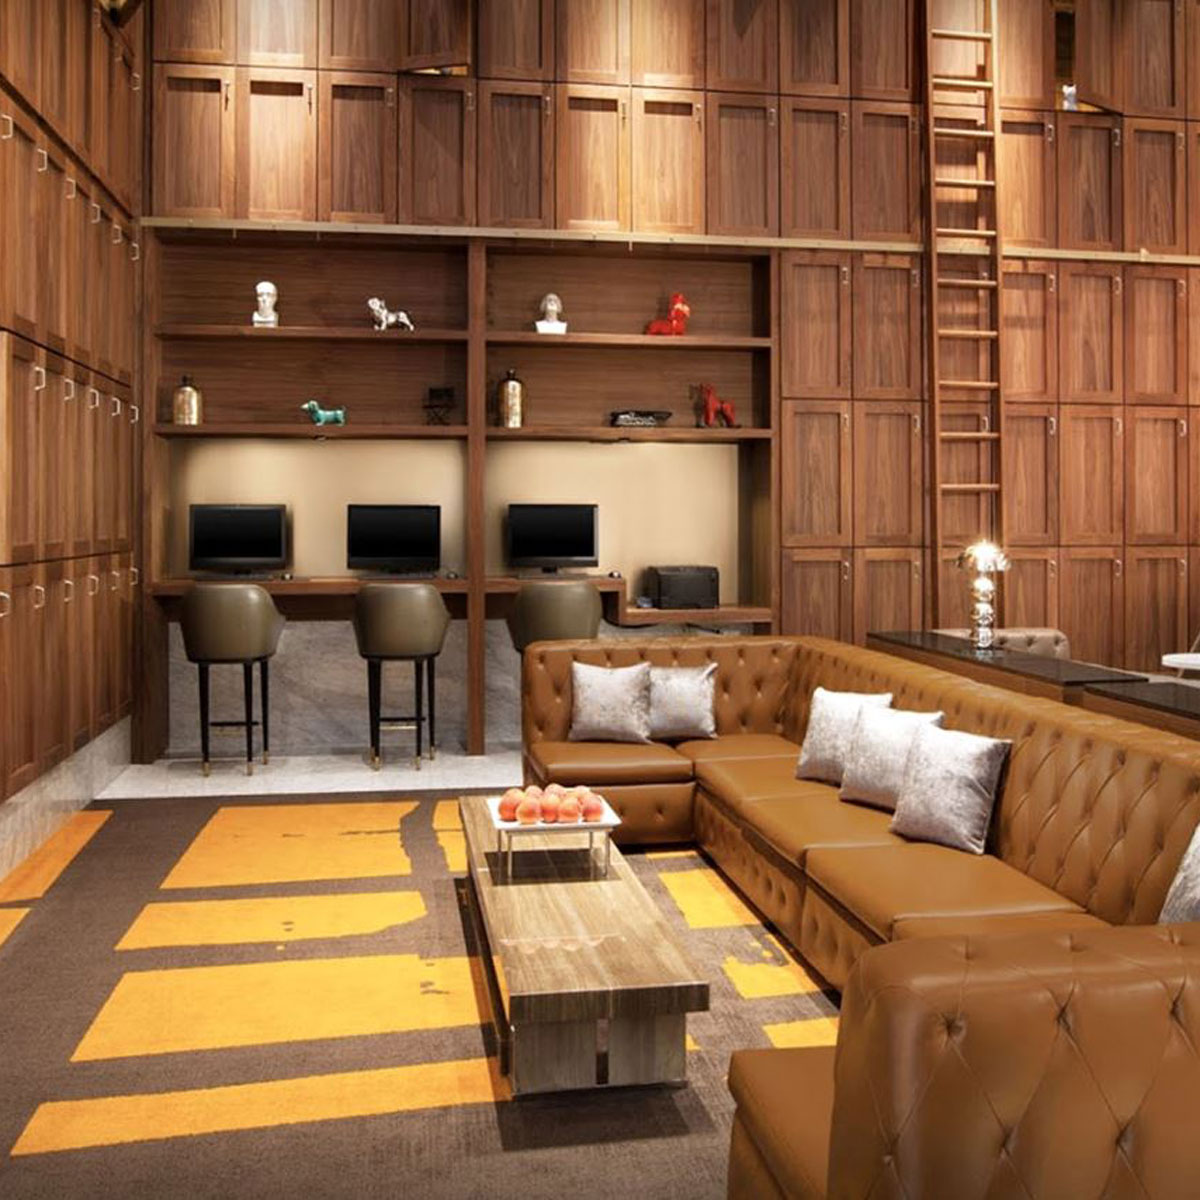 FF&E installation - Contraxx Customer Hospitality Furniture Designers Library